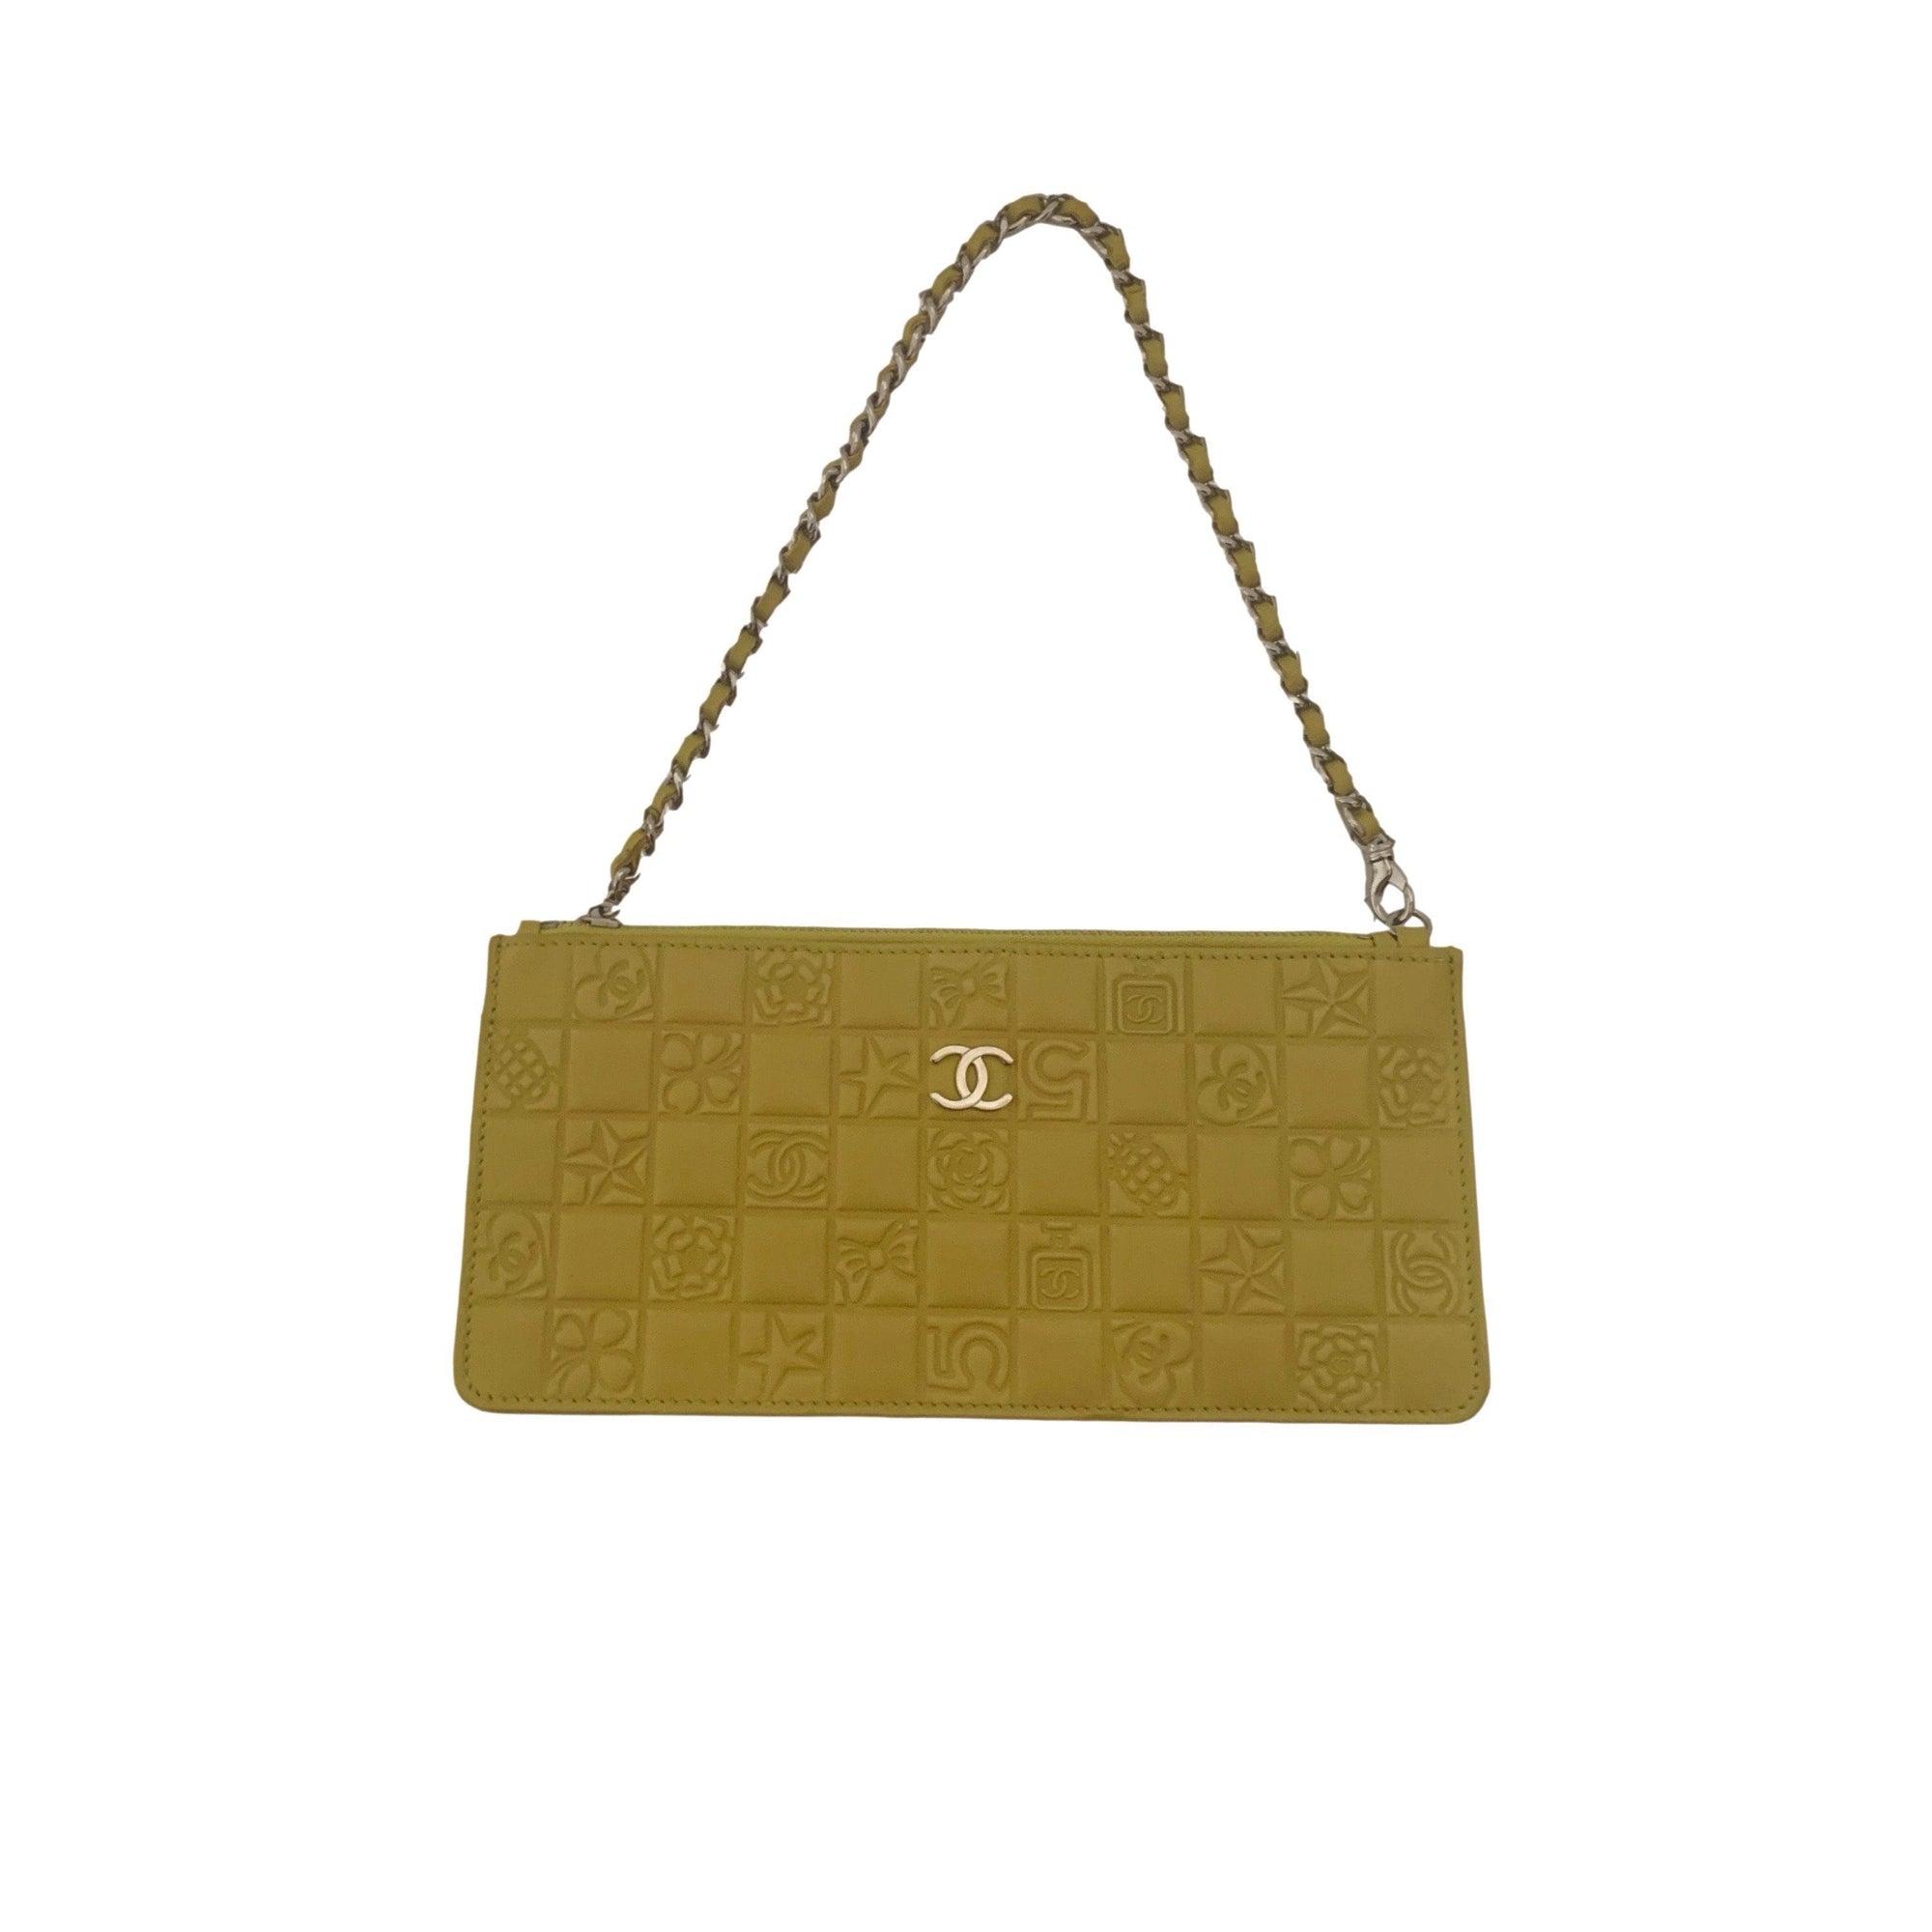 Chanel Lime Green Shoulder Bag - Handbags